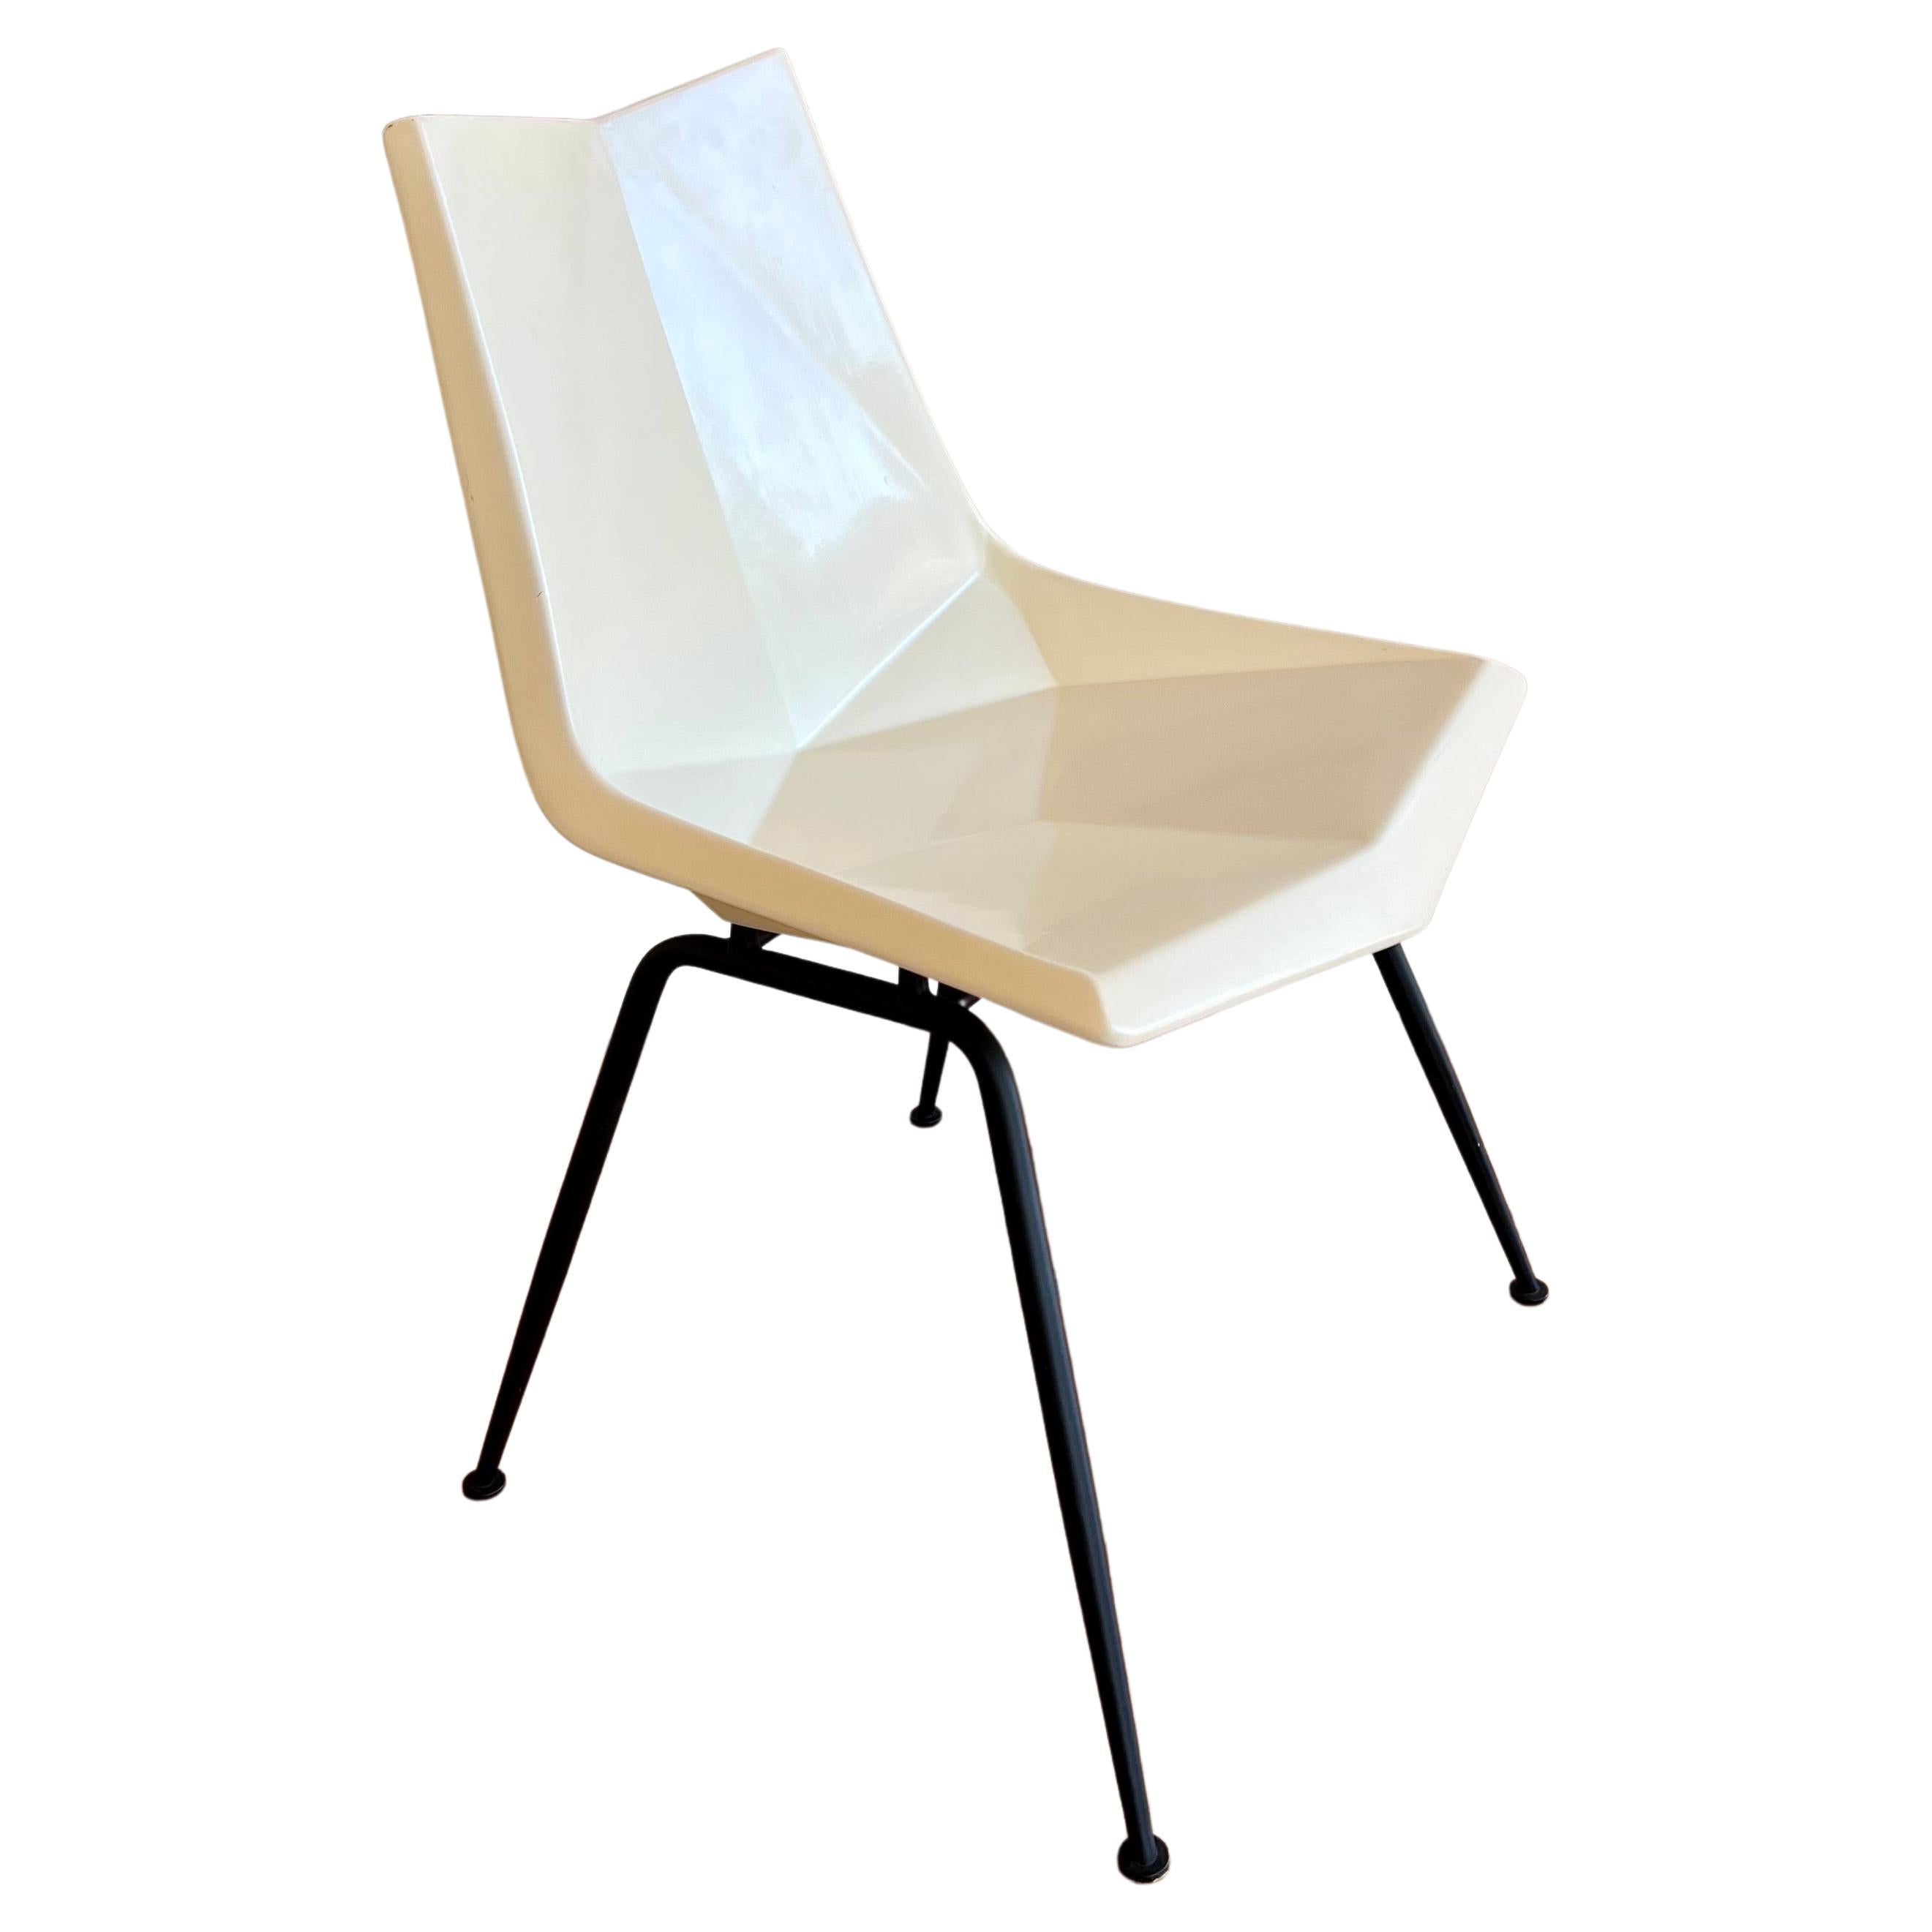 Paul McCobb Origami Ivori Desk Patio Chair Model 61 For Sale